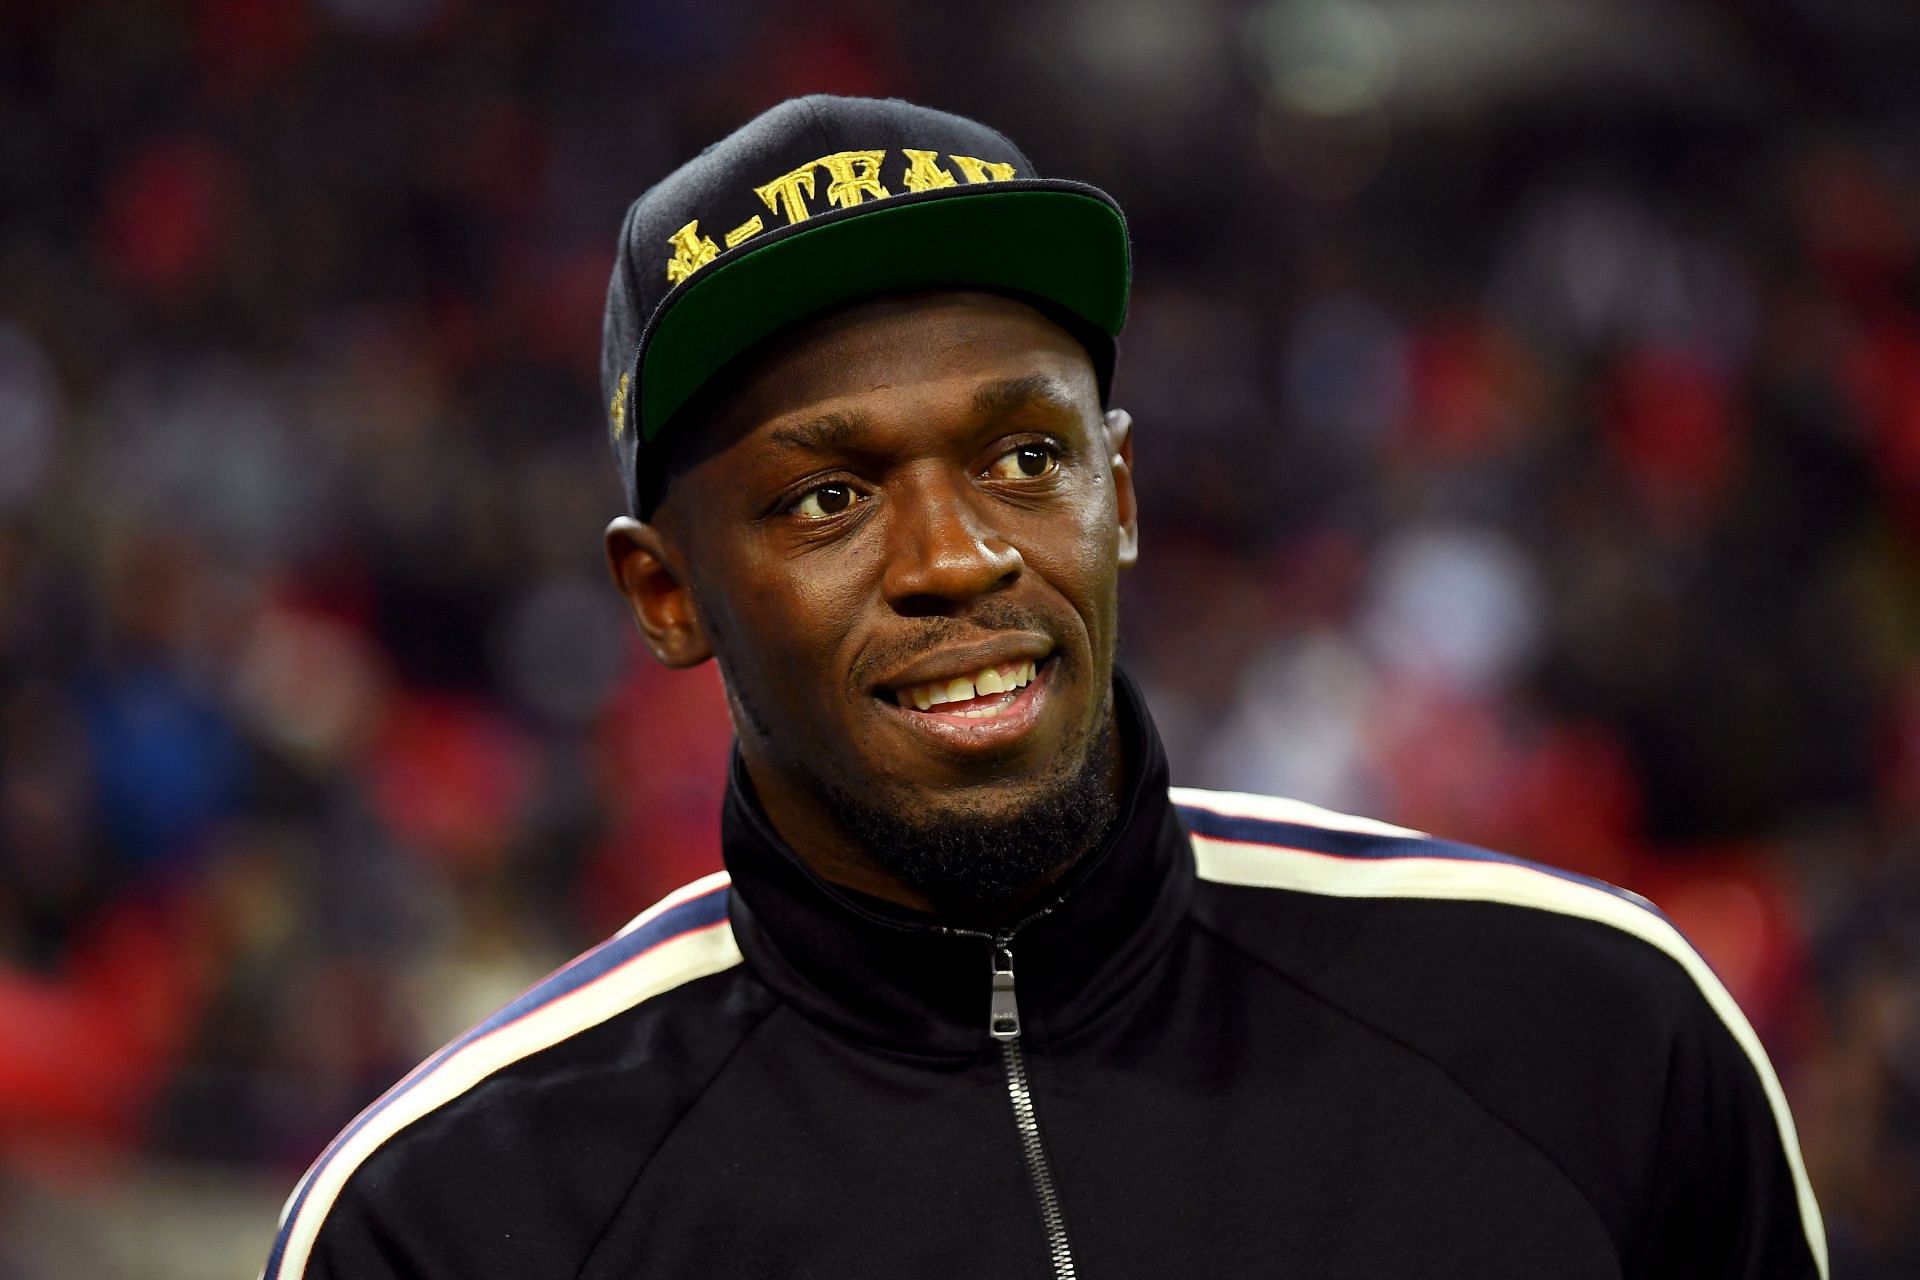 Former Olympic sprinter Usain Bolt